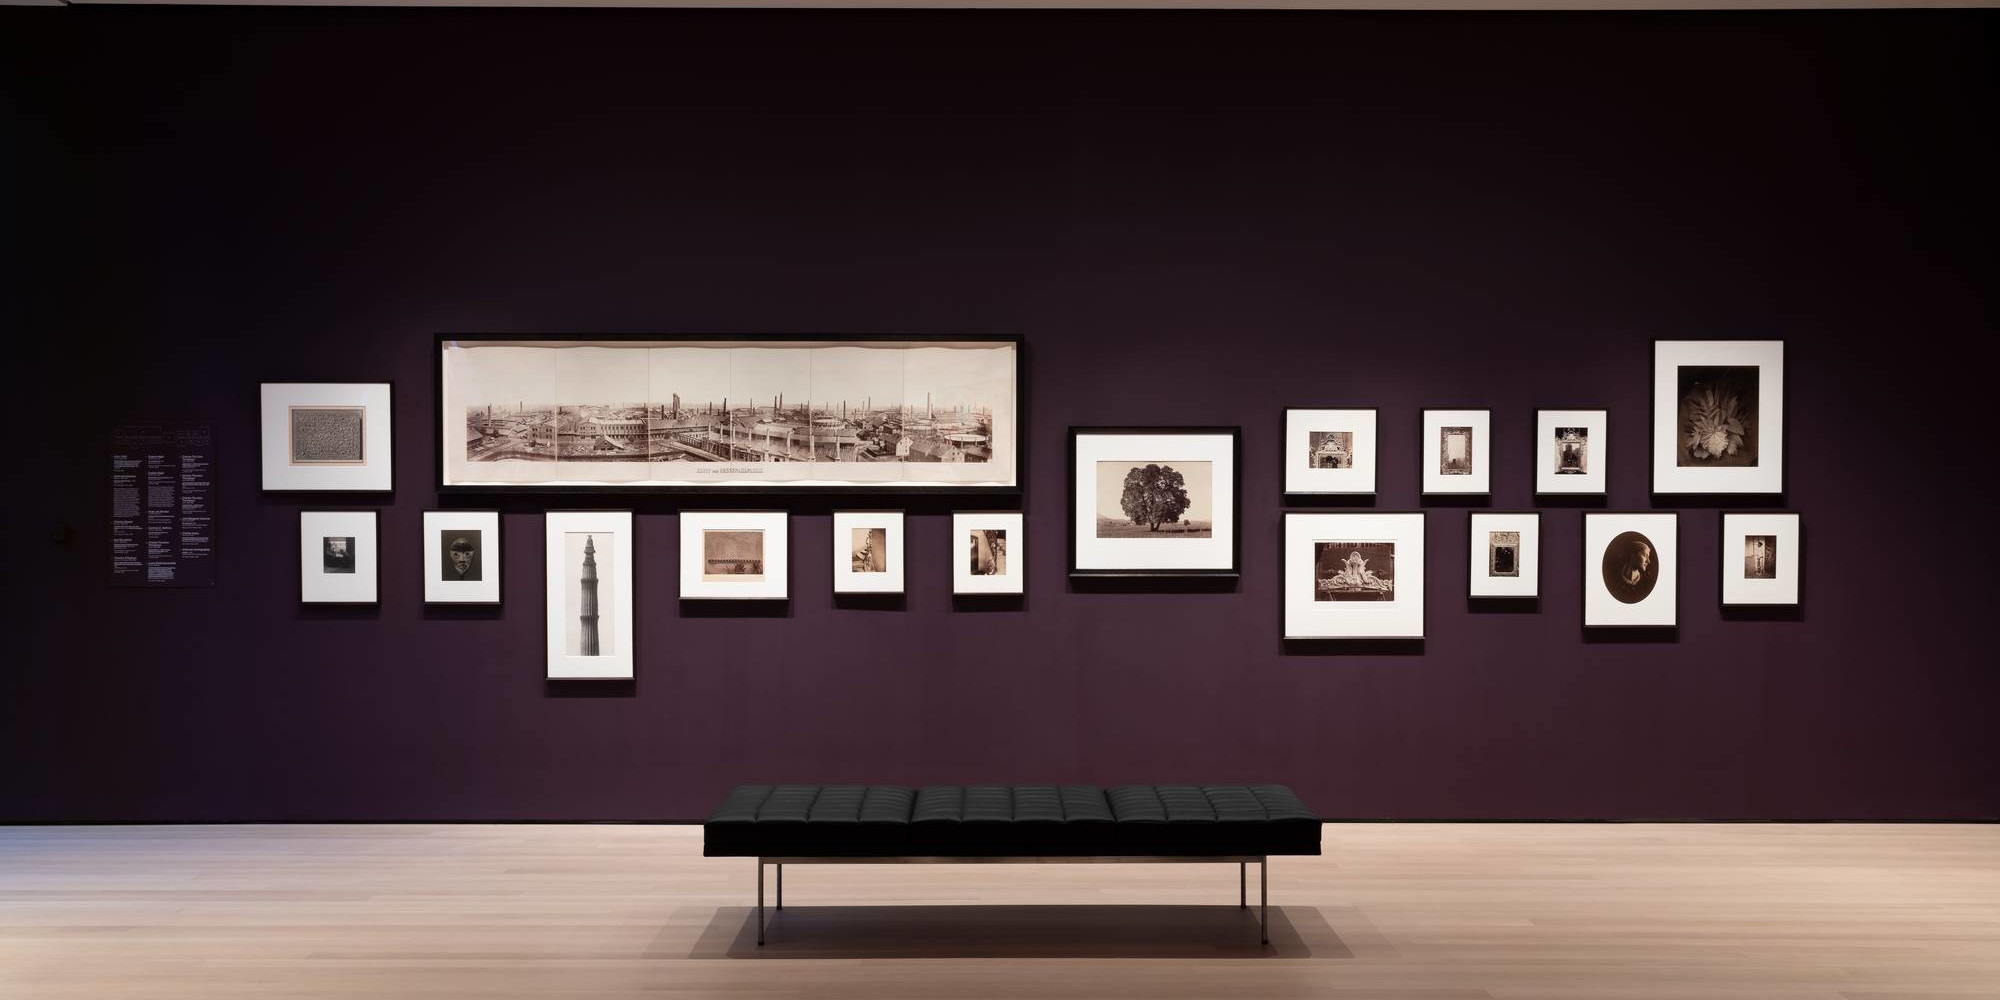 Installation view of Gallery 502: Early Photography and Film, October 2019. Photo: Jonathan Muzikar